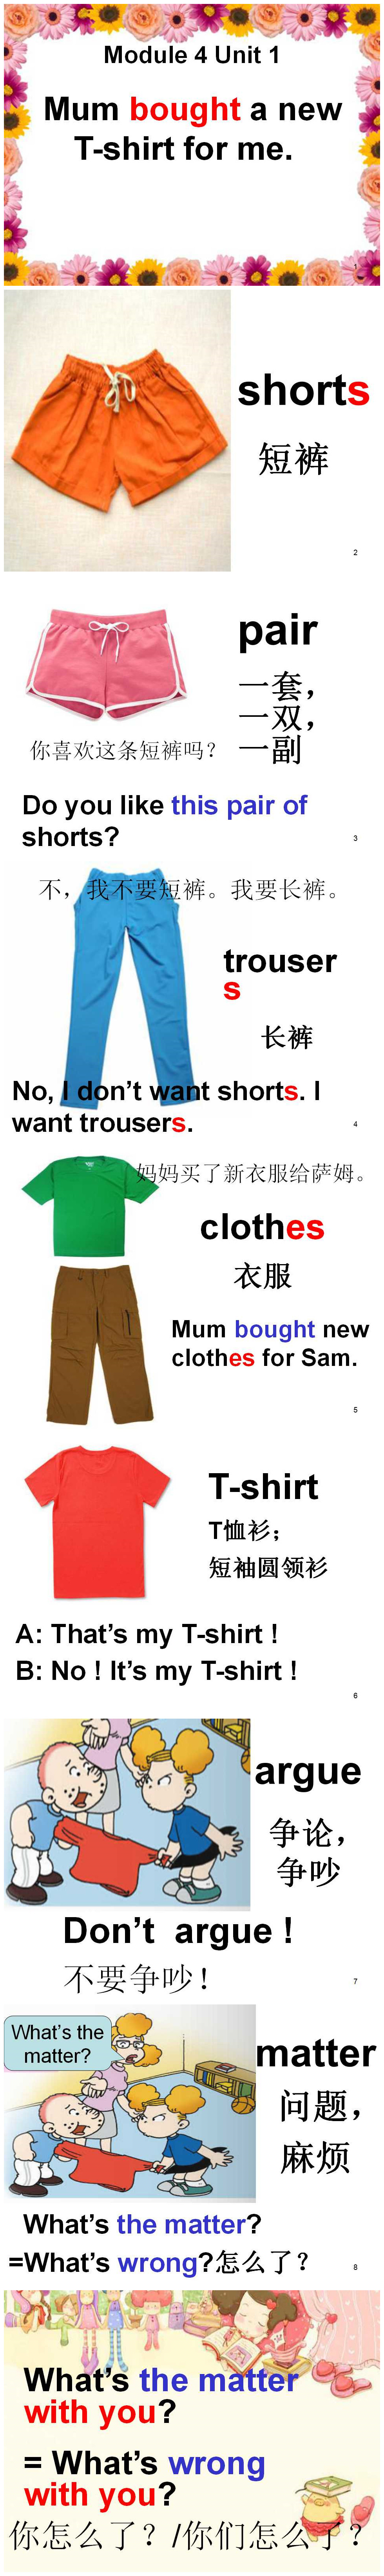 《Mum bought a new T-shirt for me》PPT课件3PPT课件下载